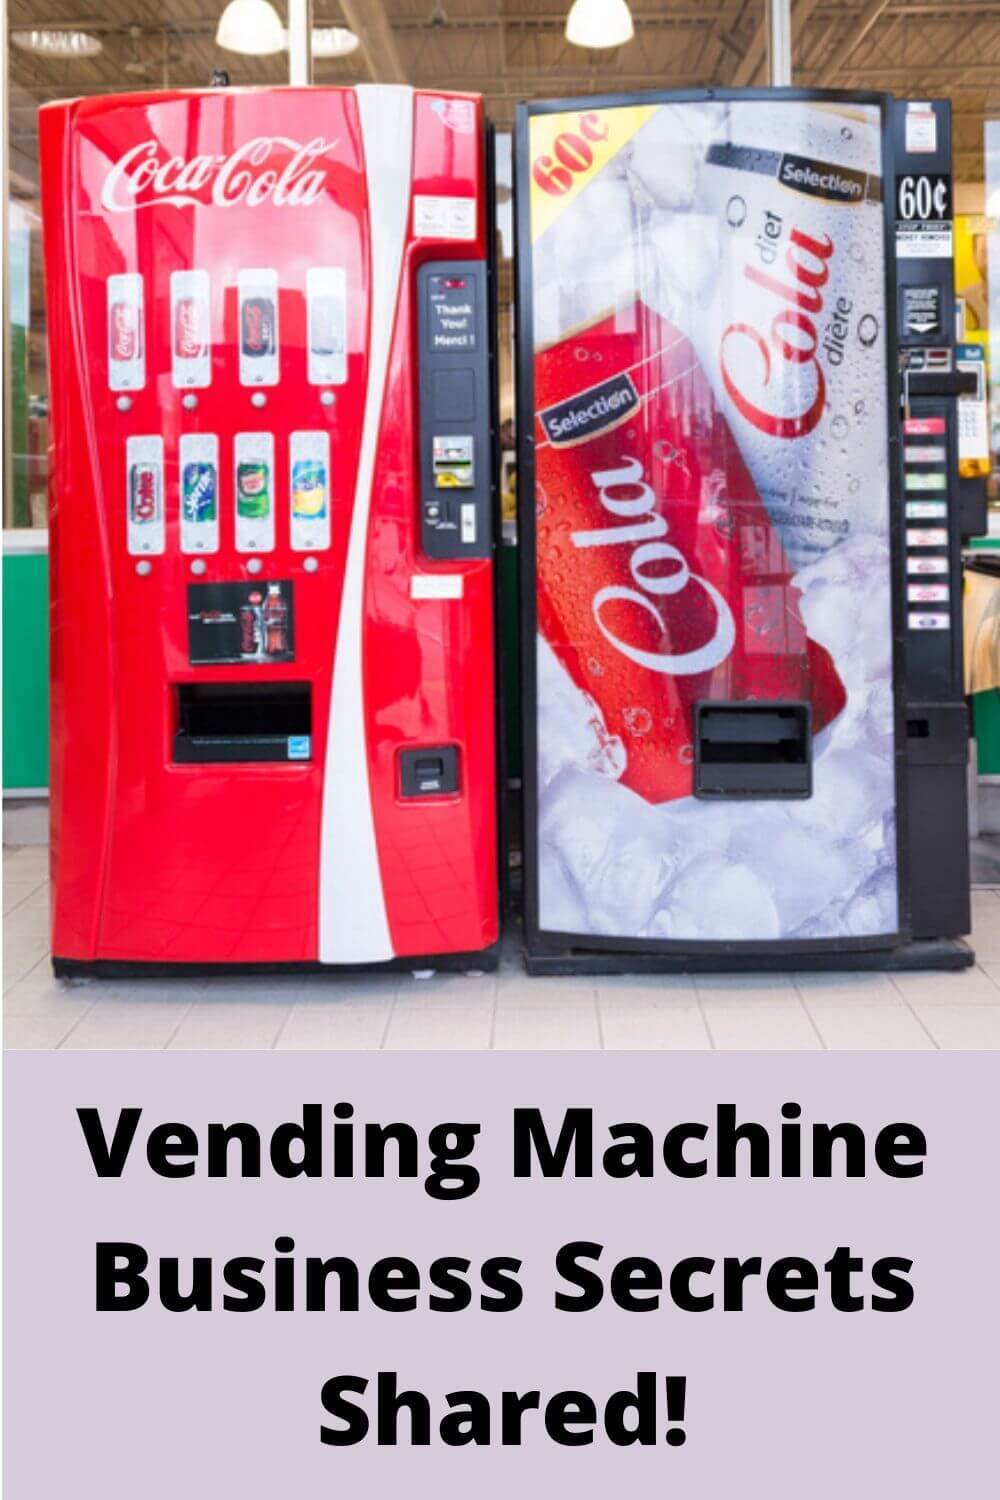 Vending machine business secrets shared!